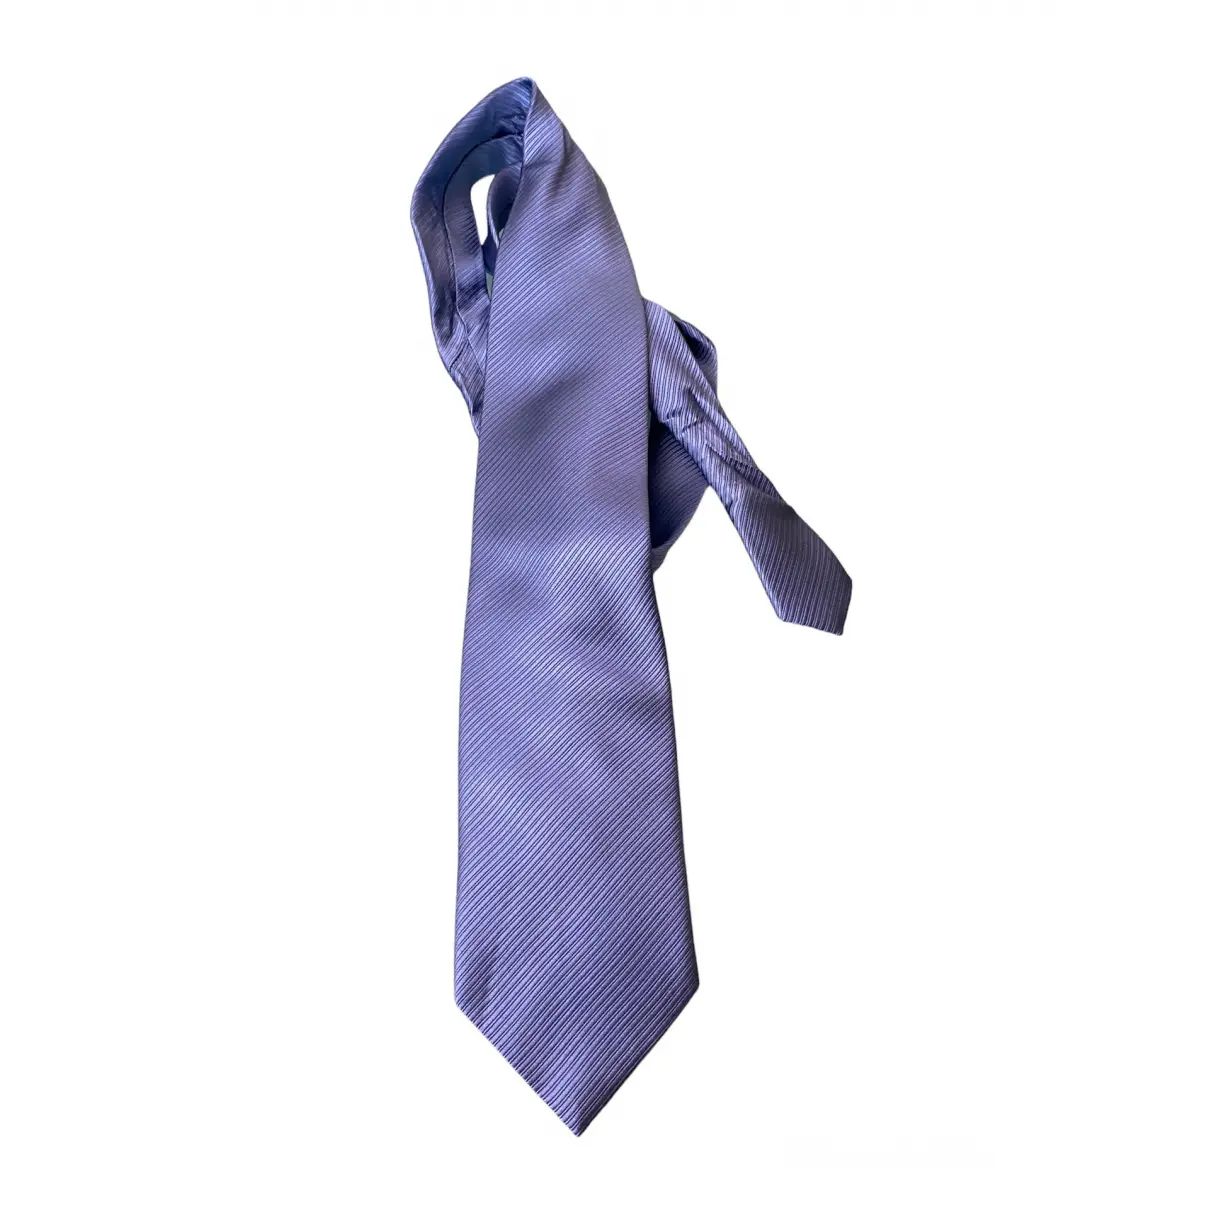 Buy Silviano Biagini Silk tie online